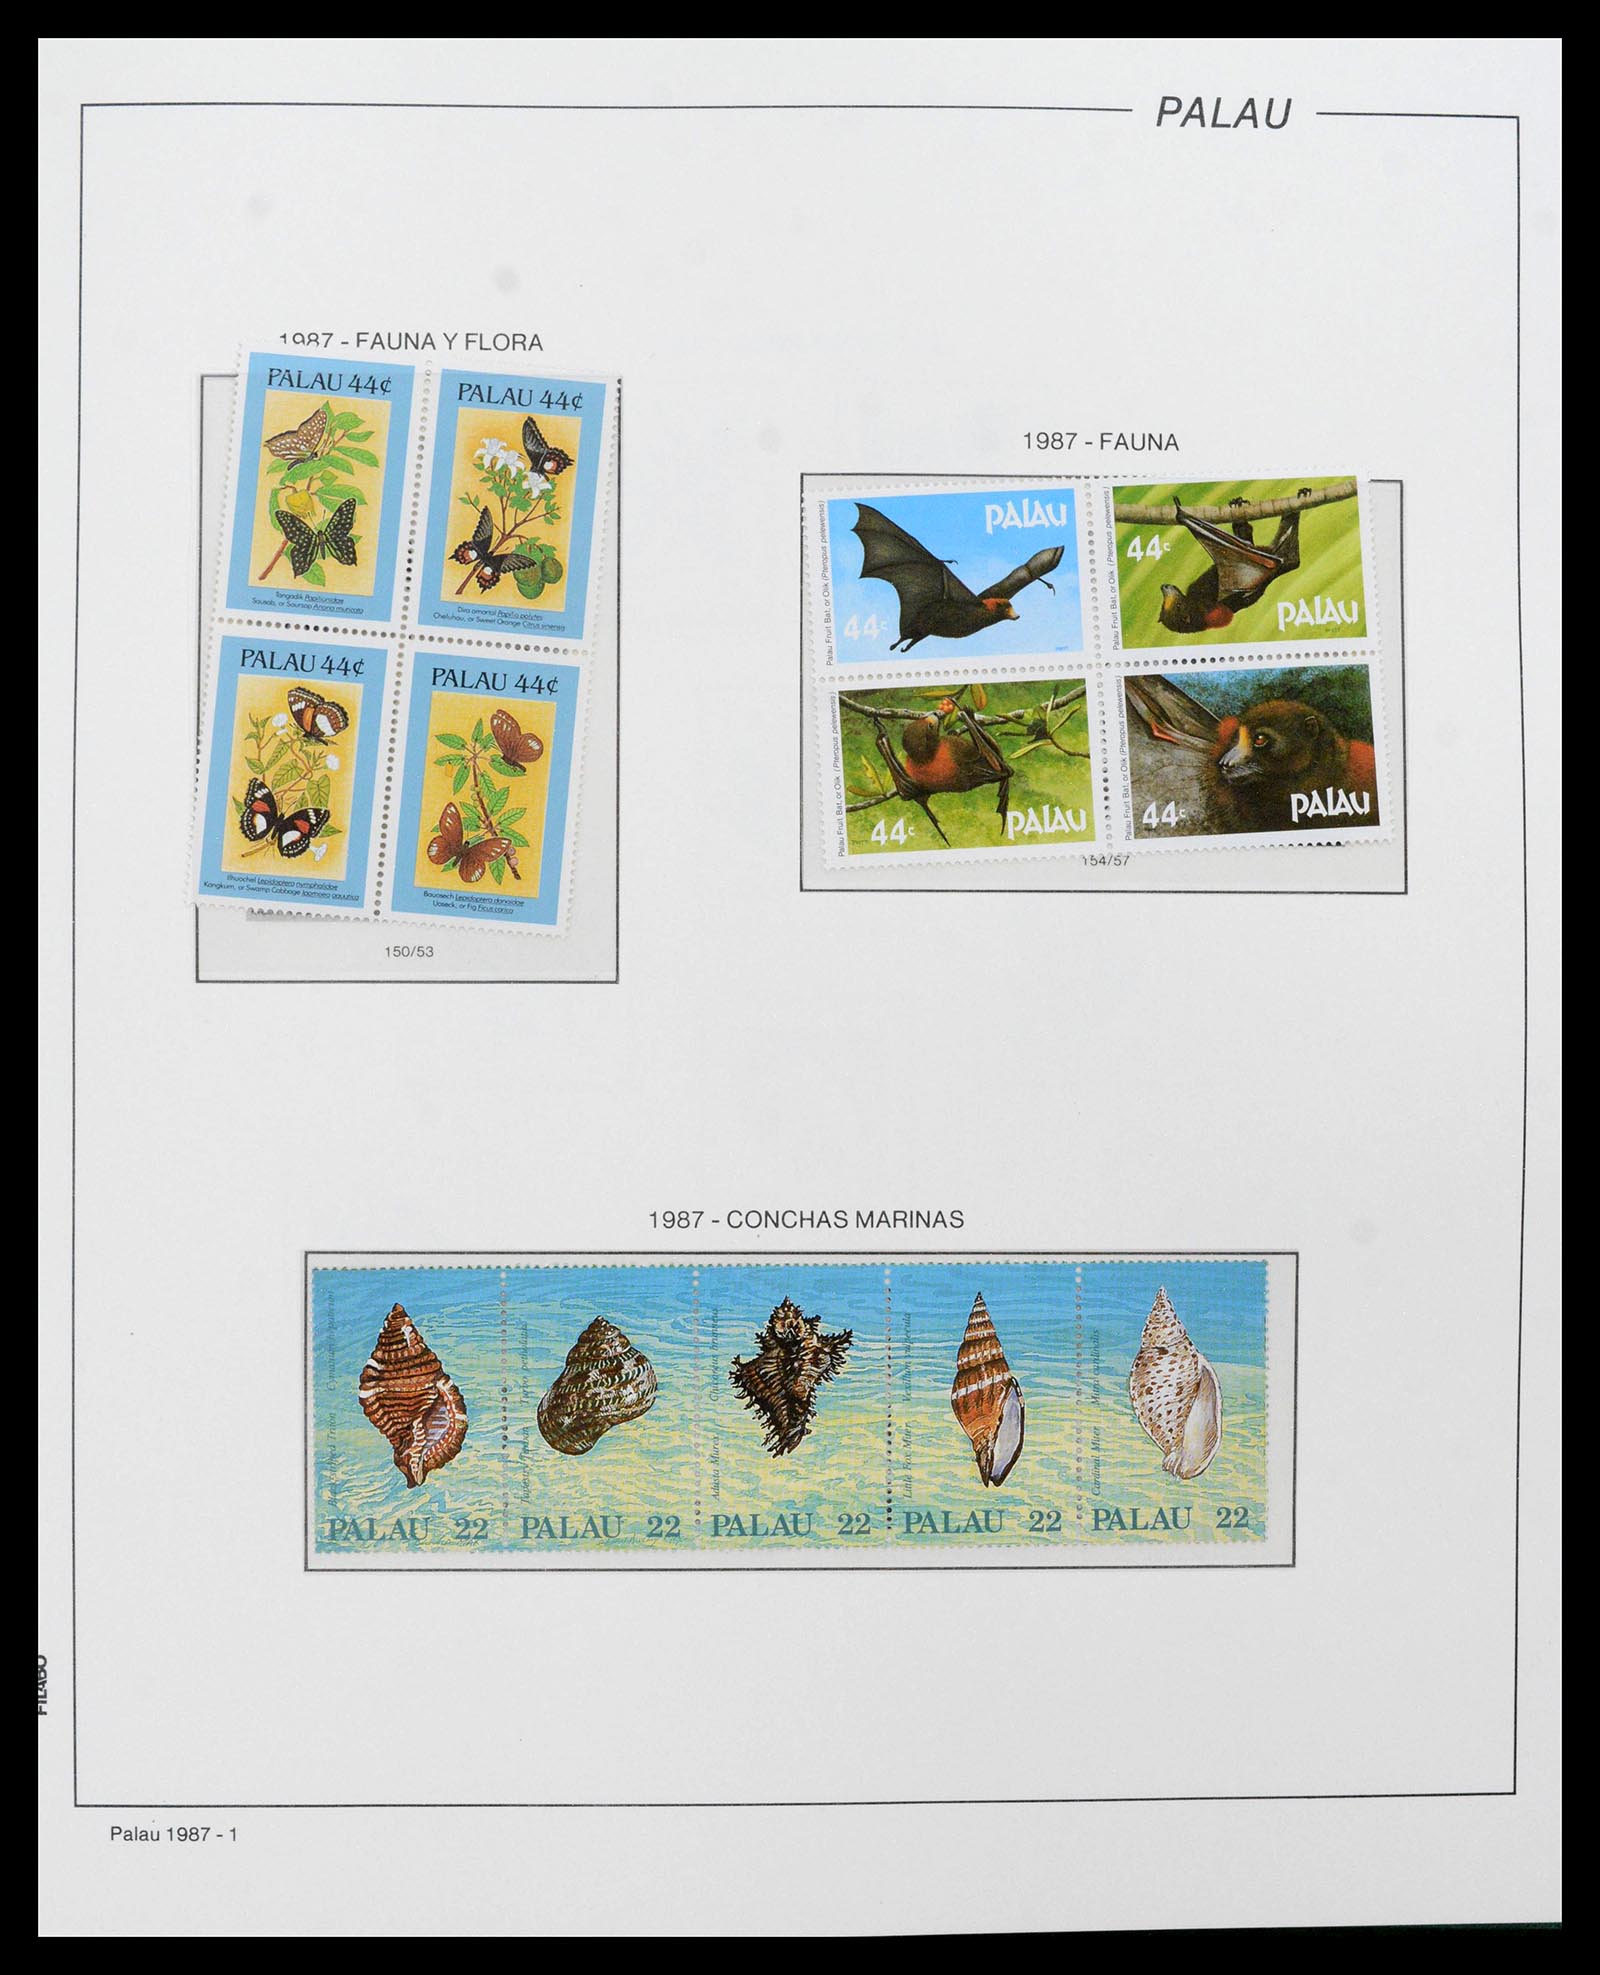 39222 0014 - Stamp collection 39222 Palau, Micronesia and Marshall islands 1980-1995.